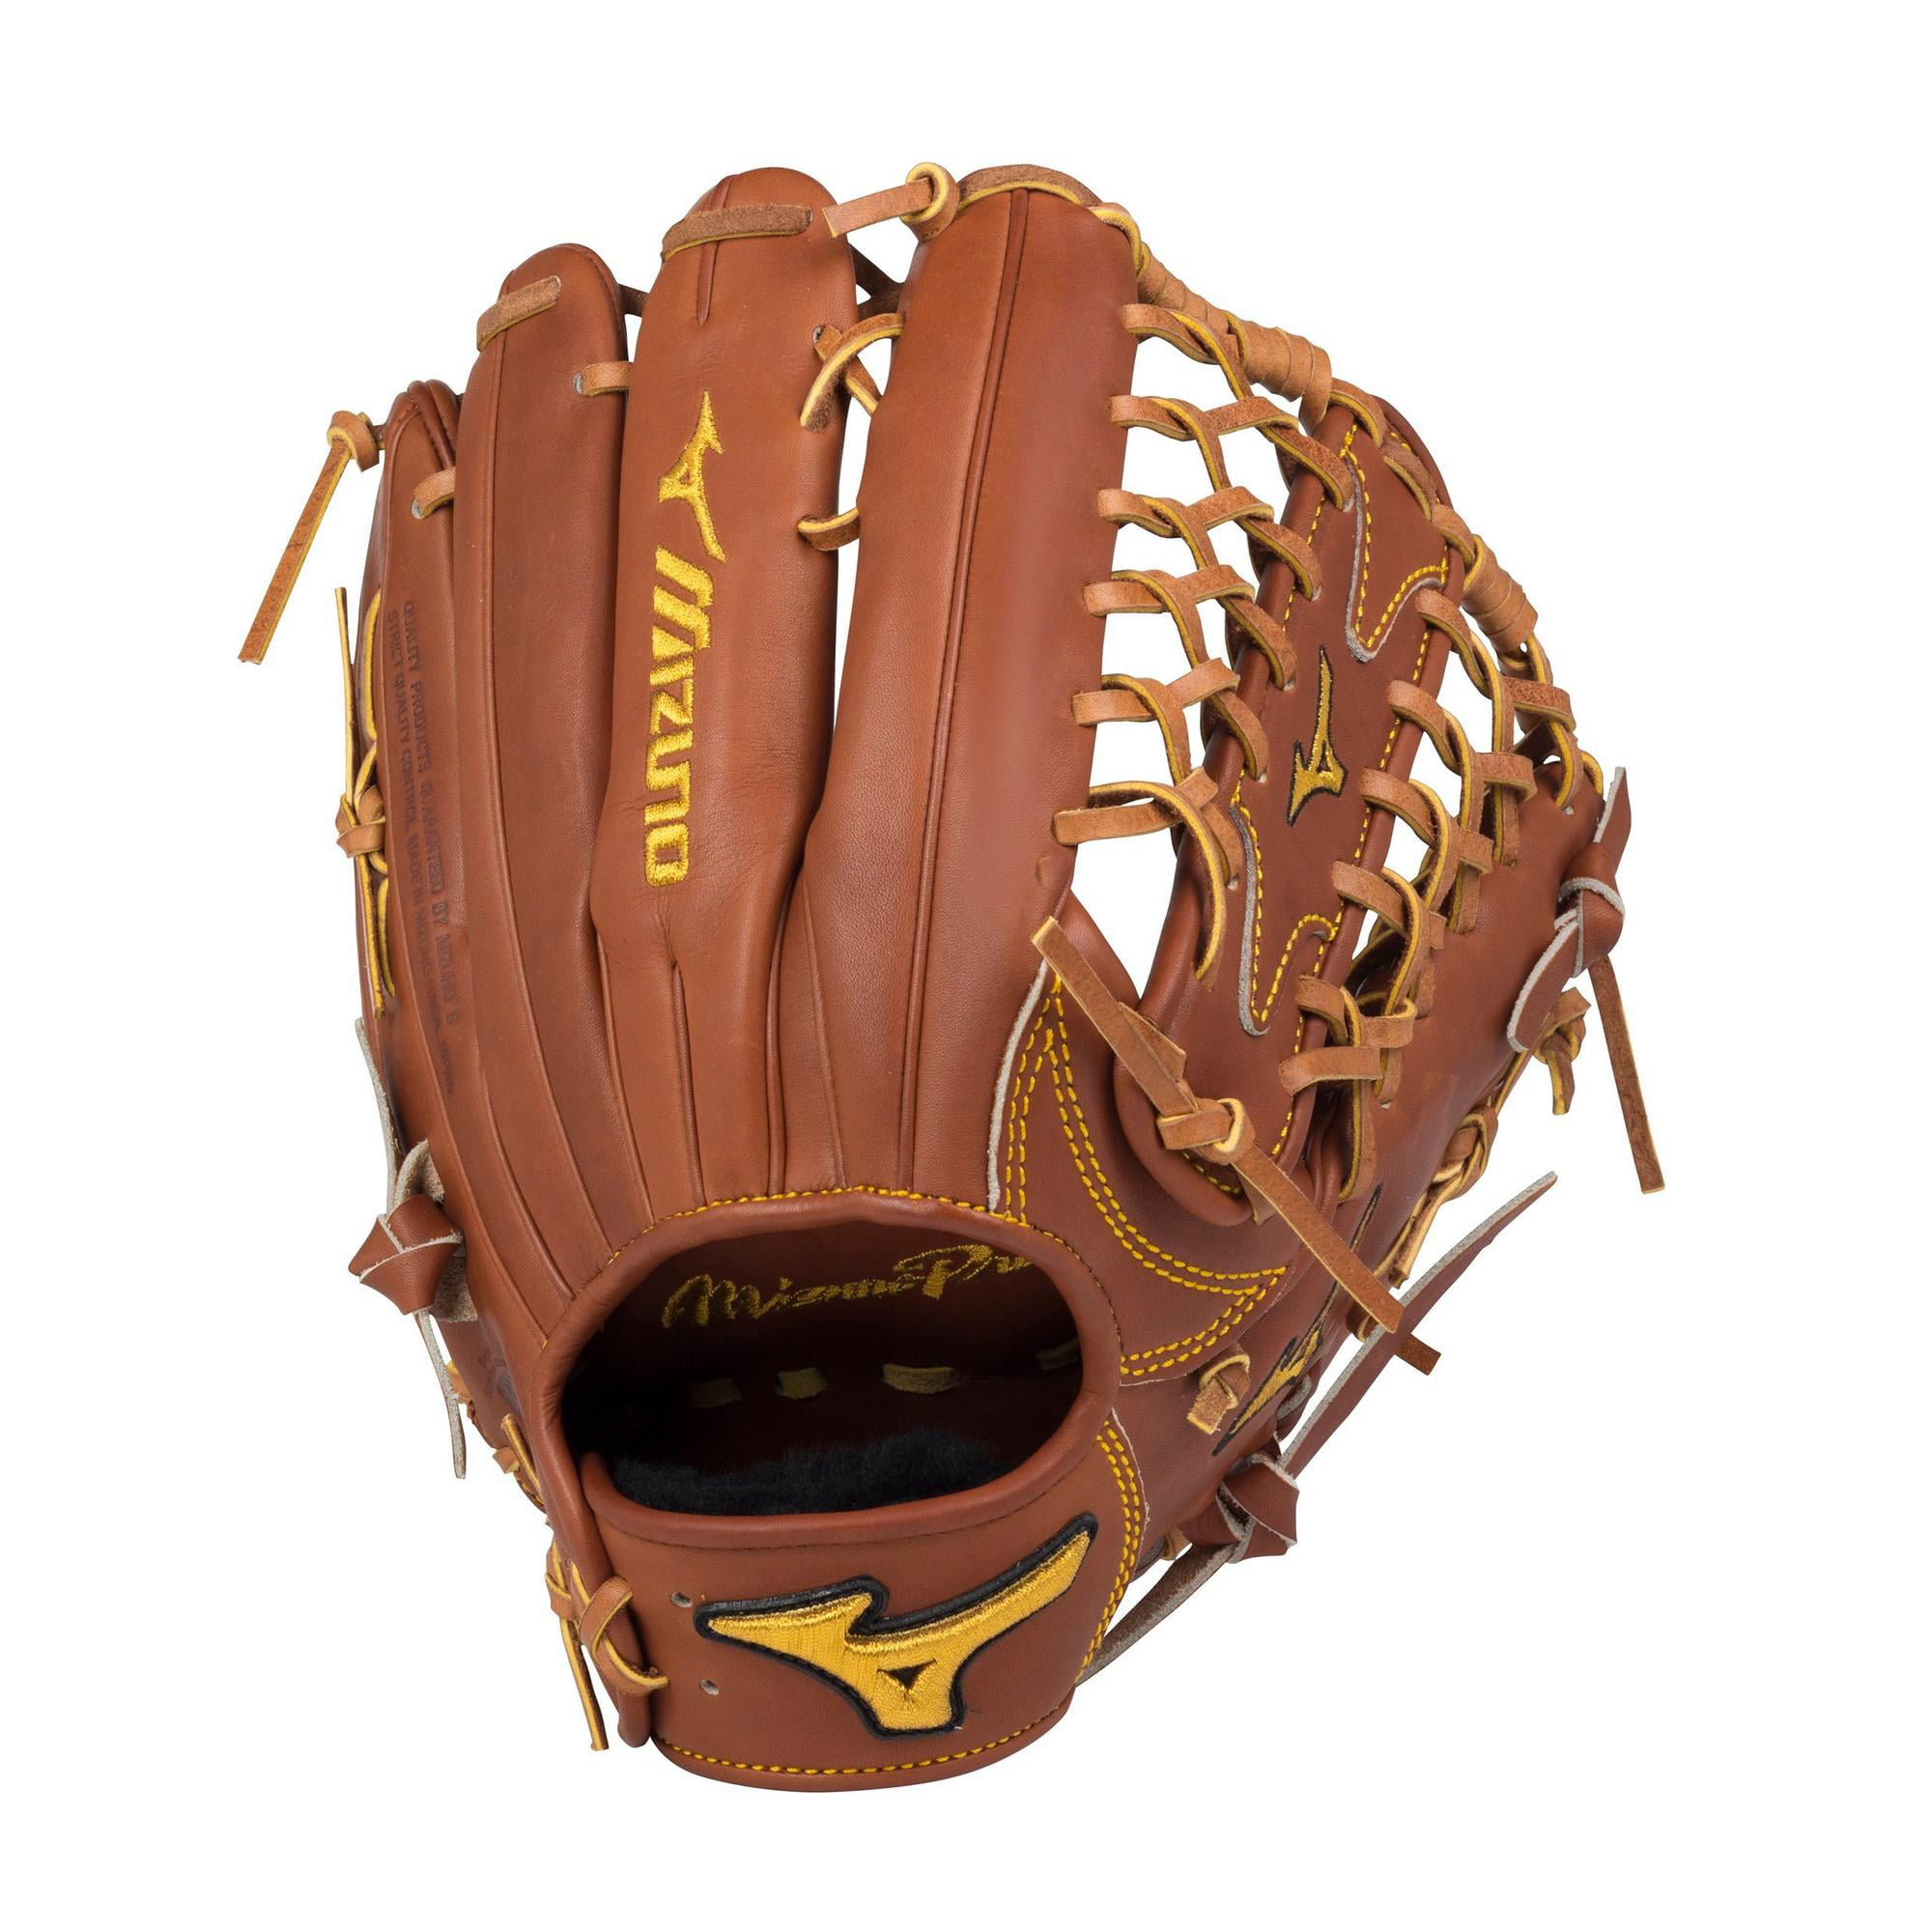 Outfield Baseball Glove 12.75 